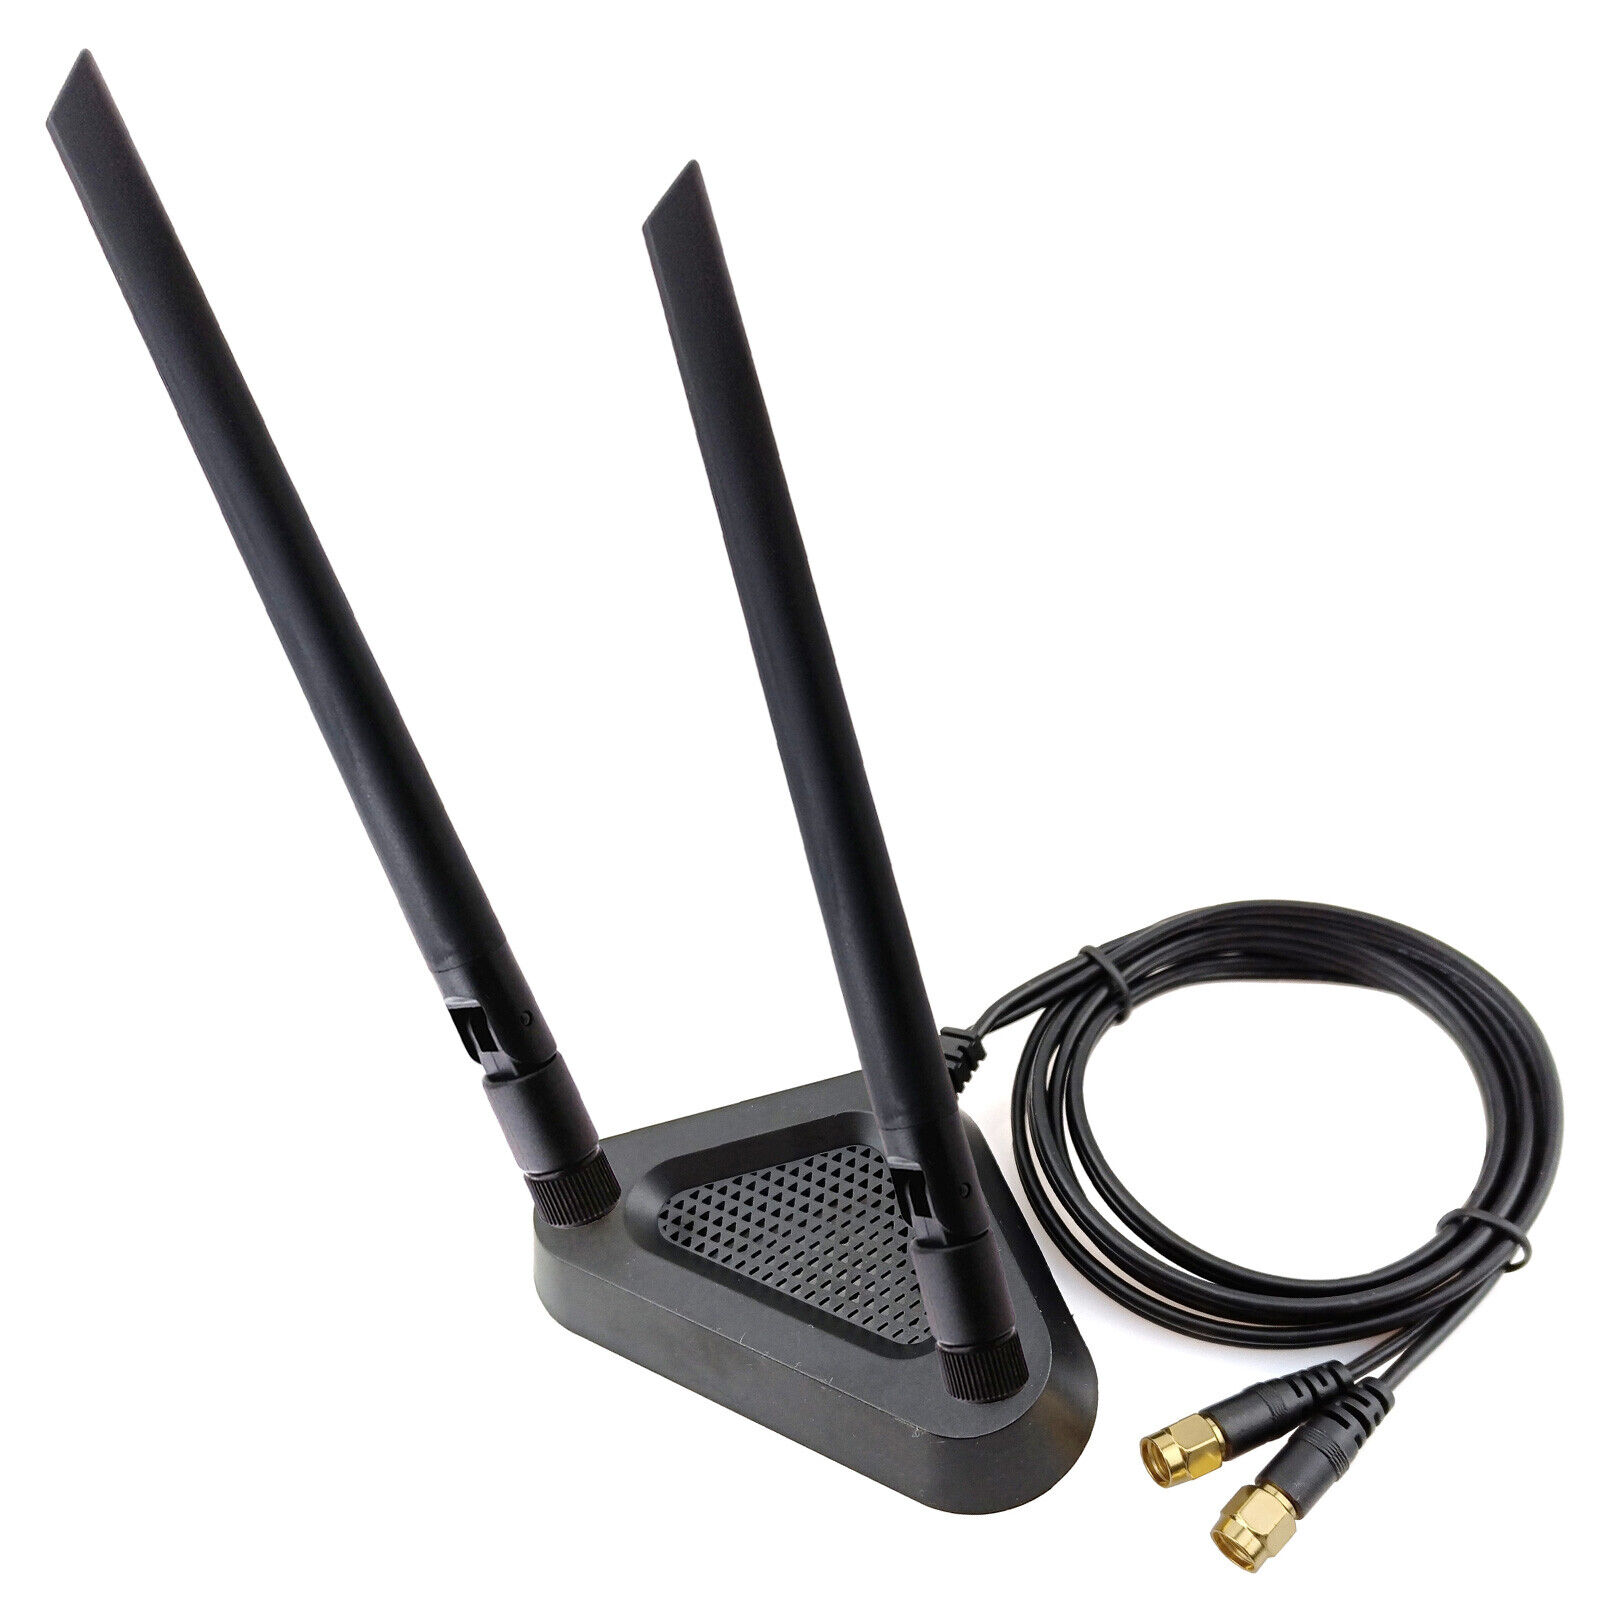 6dBi WiFi Antenna Magnet Base RP-SMA PC Gaming Wireless Network Range Extension